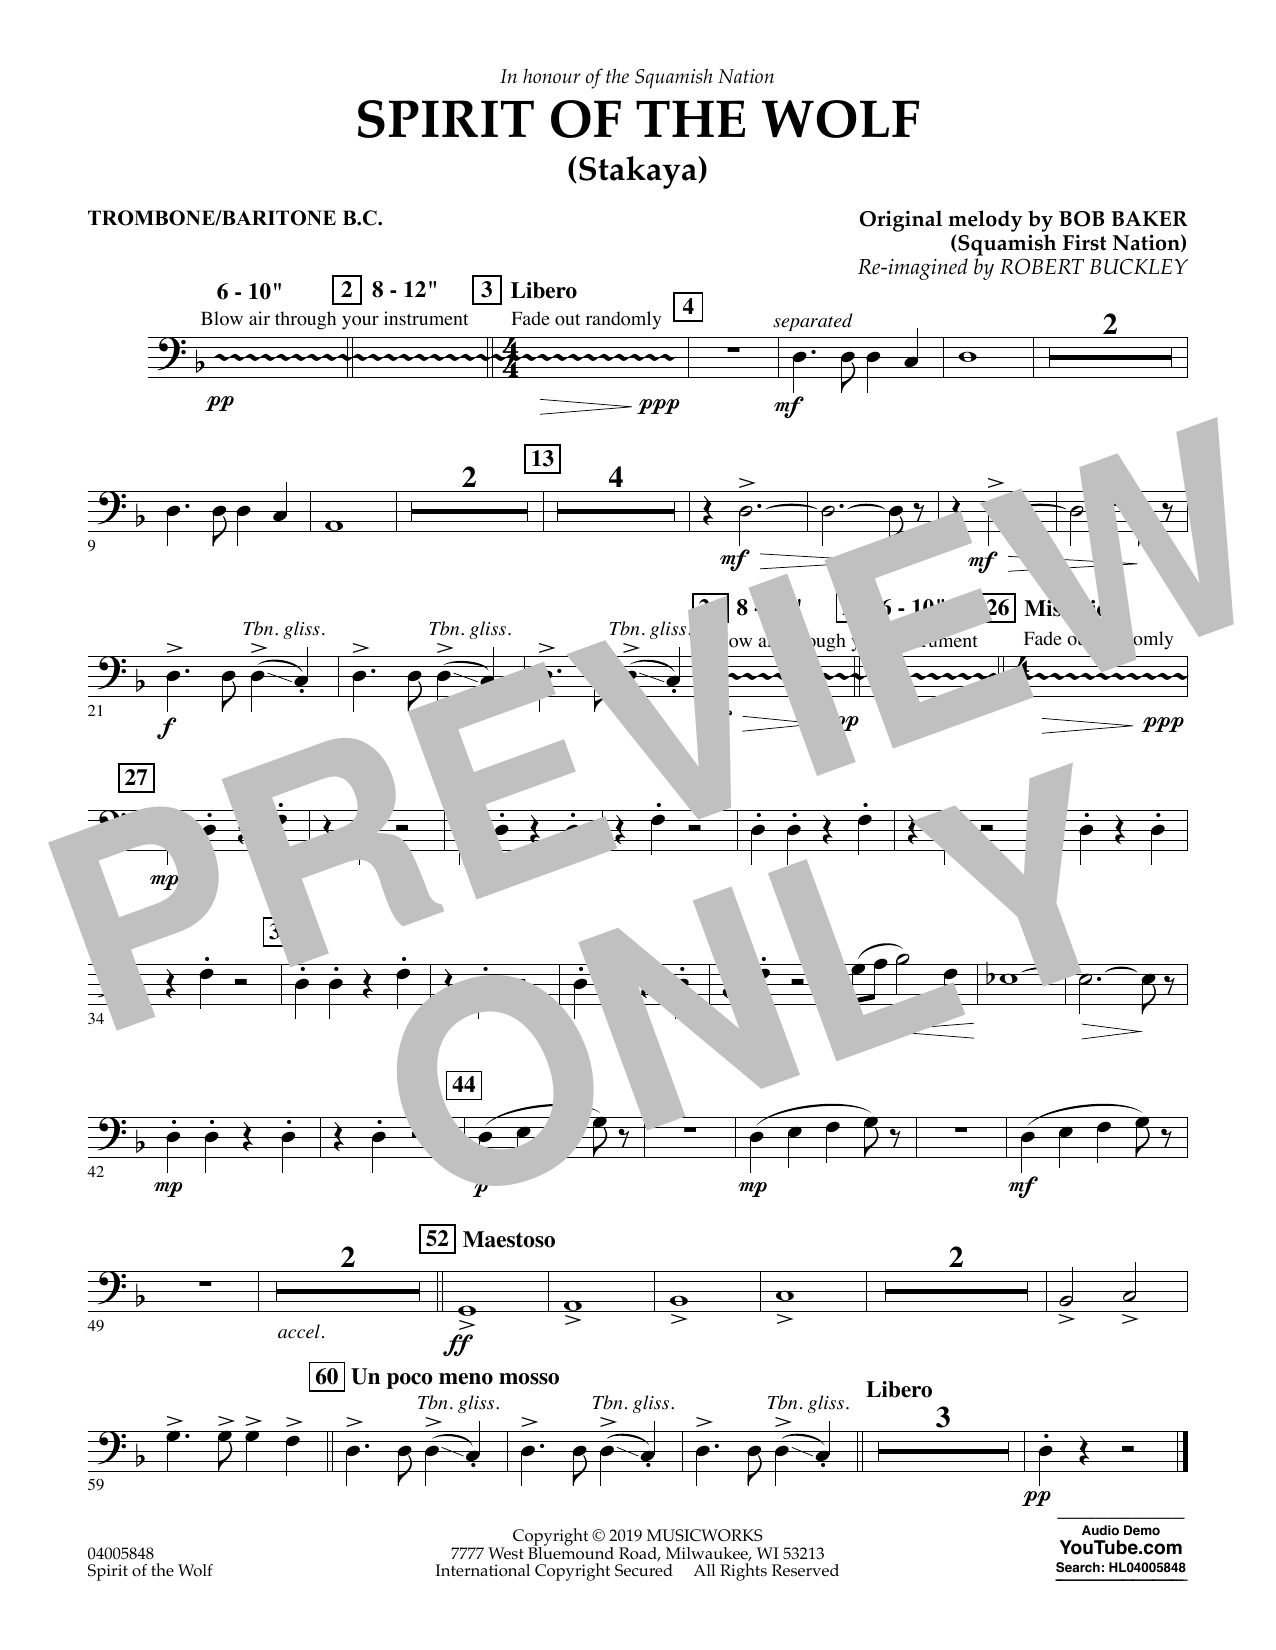 Robert Buckley Spirit of the Wolf (Stakaya) - Trombone/Baritone B.C. Sheet Music Notes & Chords for Concert Band - Download or Print PDF